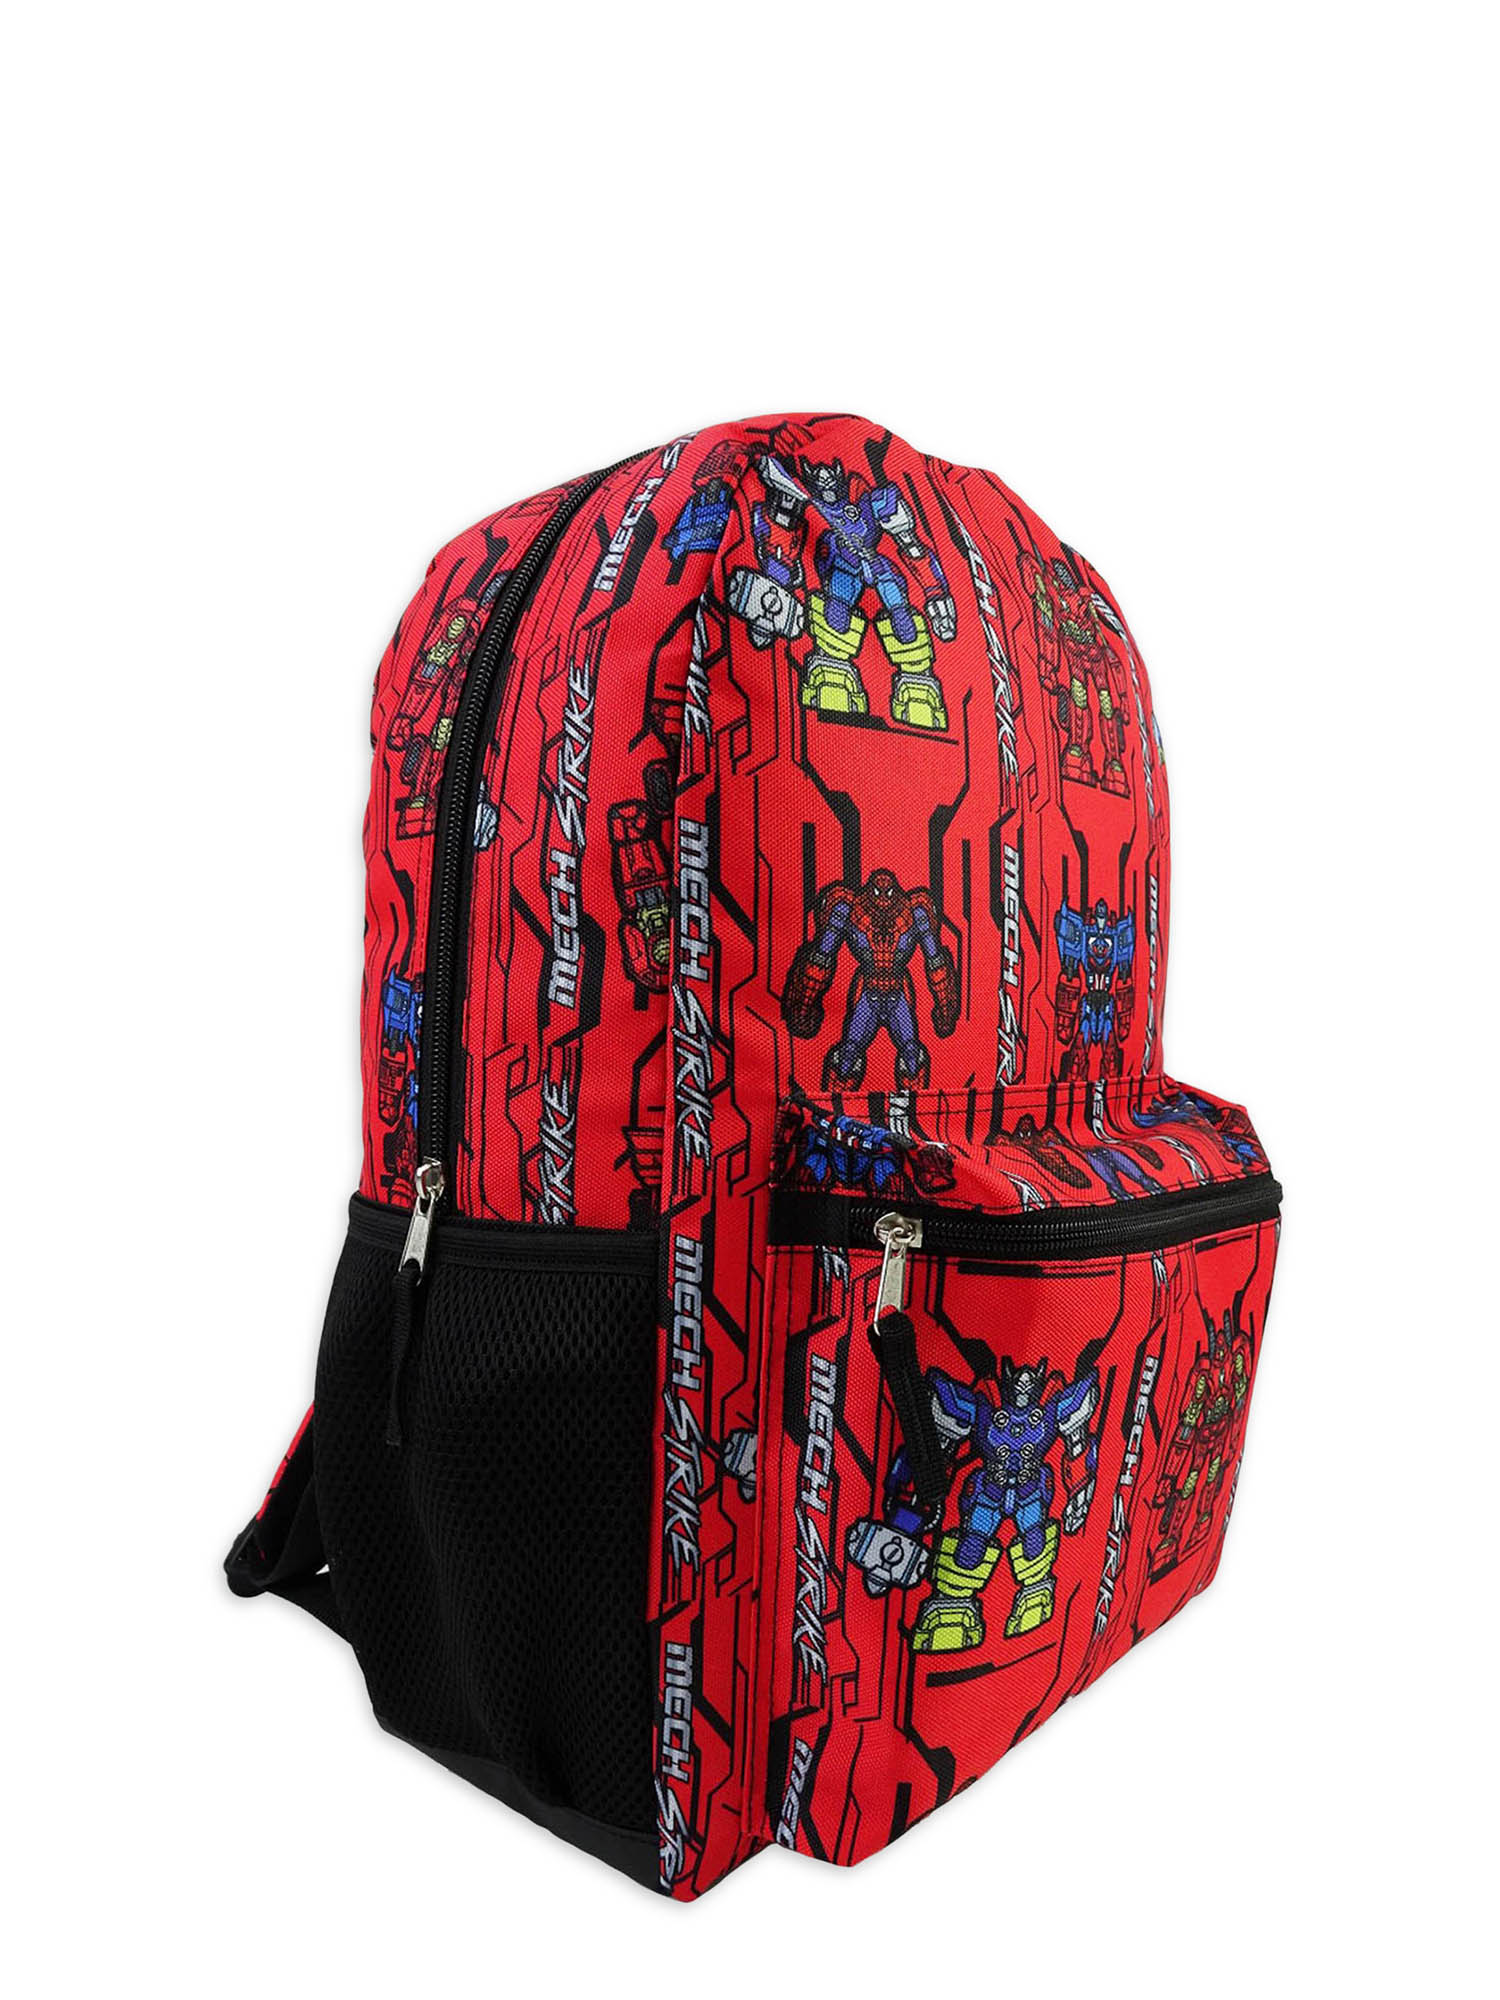 Marvel Spider-Man Mech Strike All over Print Boys' Red Backpack - image 2 of 5